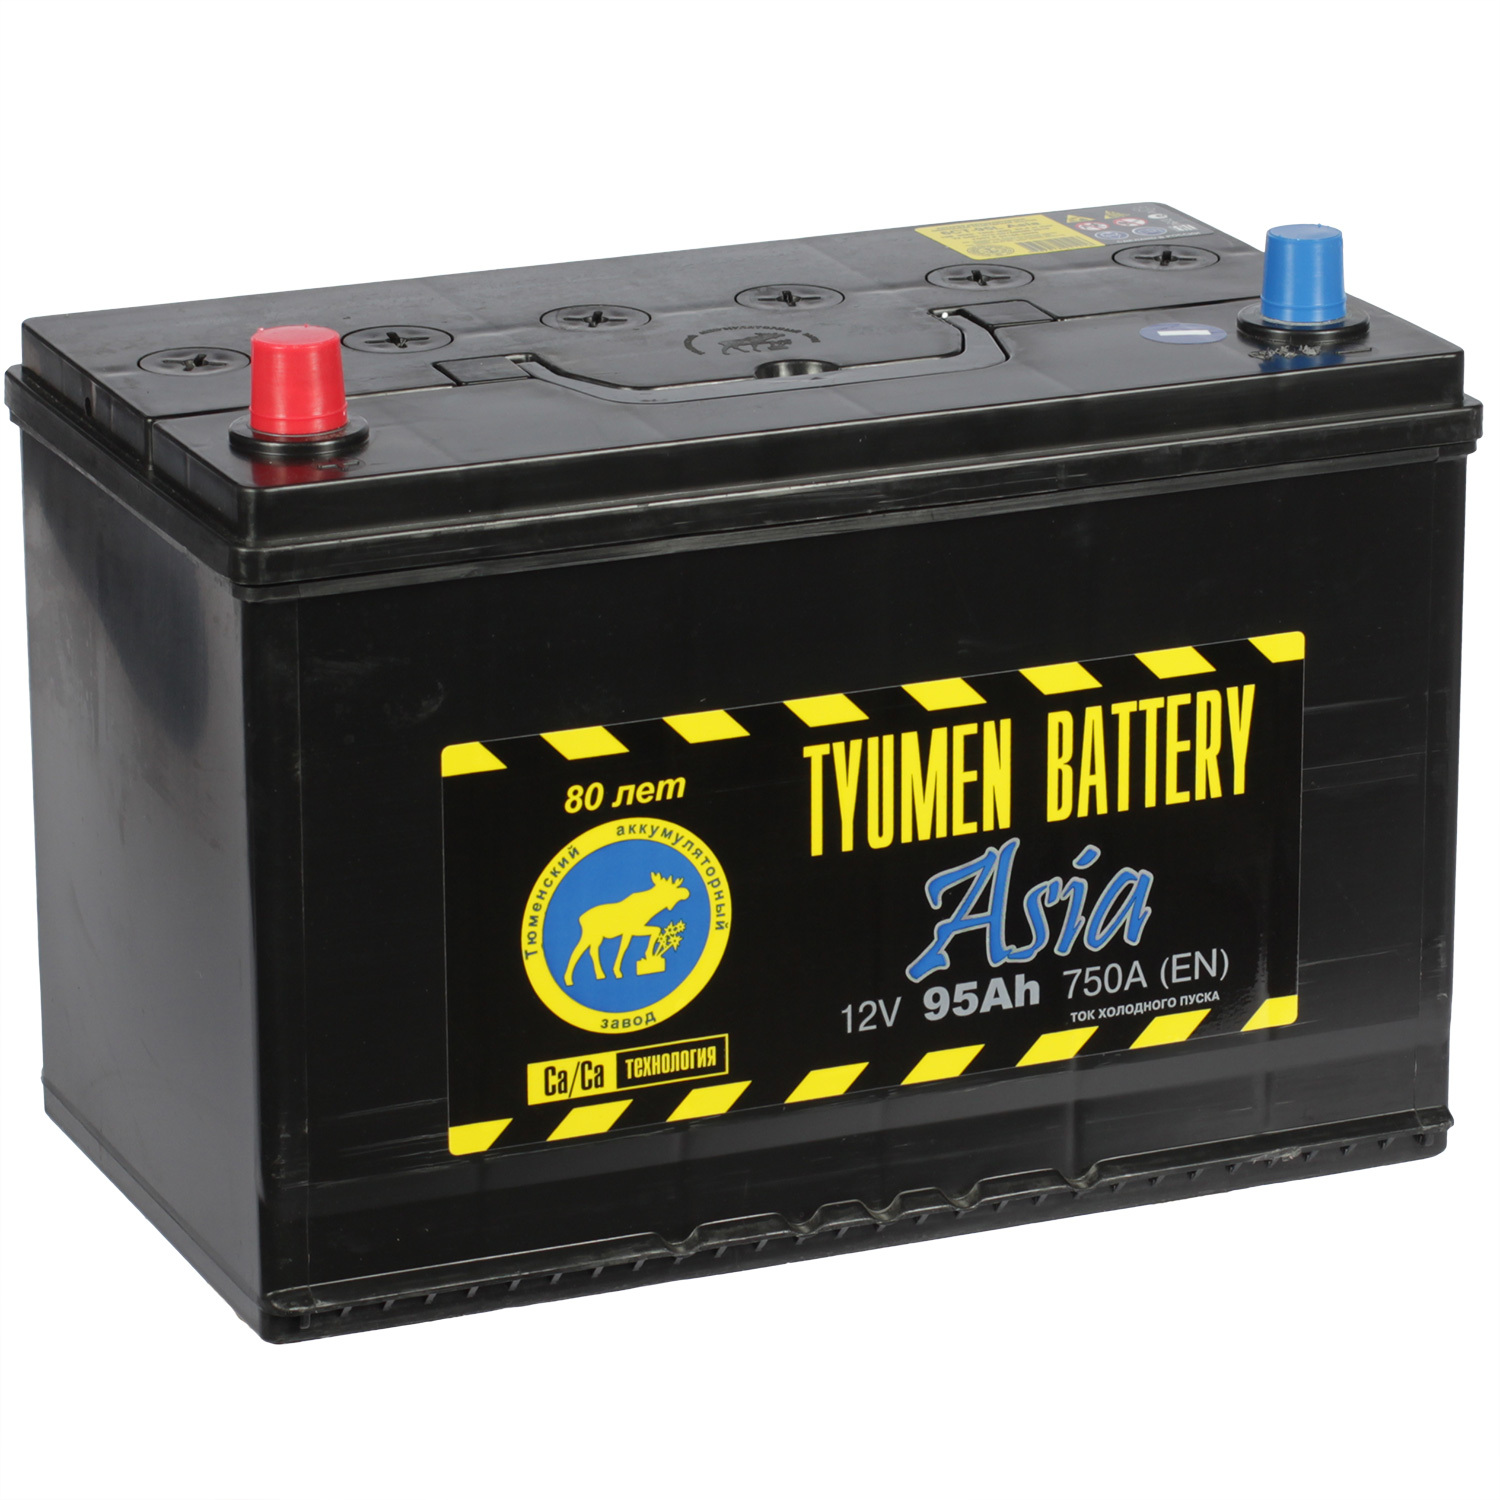 Tyumen Battery Автомобильный аккумулятор Tyumen Battery 95 Ач прямая полярность D31R exide автомобильный аккумулятор exide 95 ач прямая полярность d31r